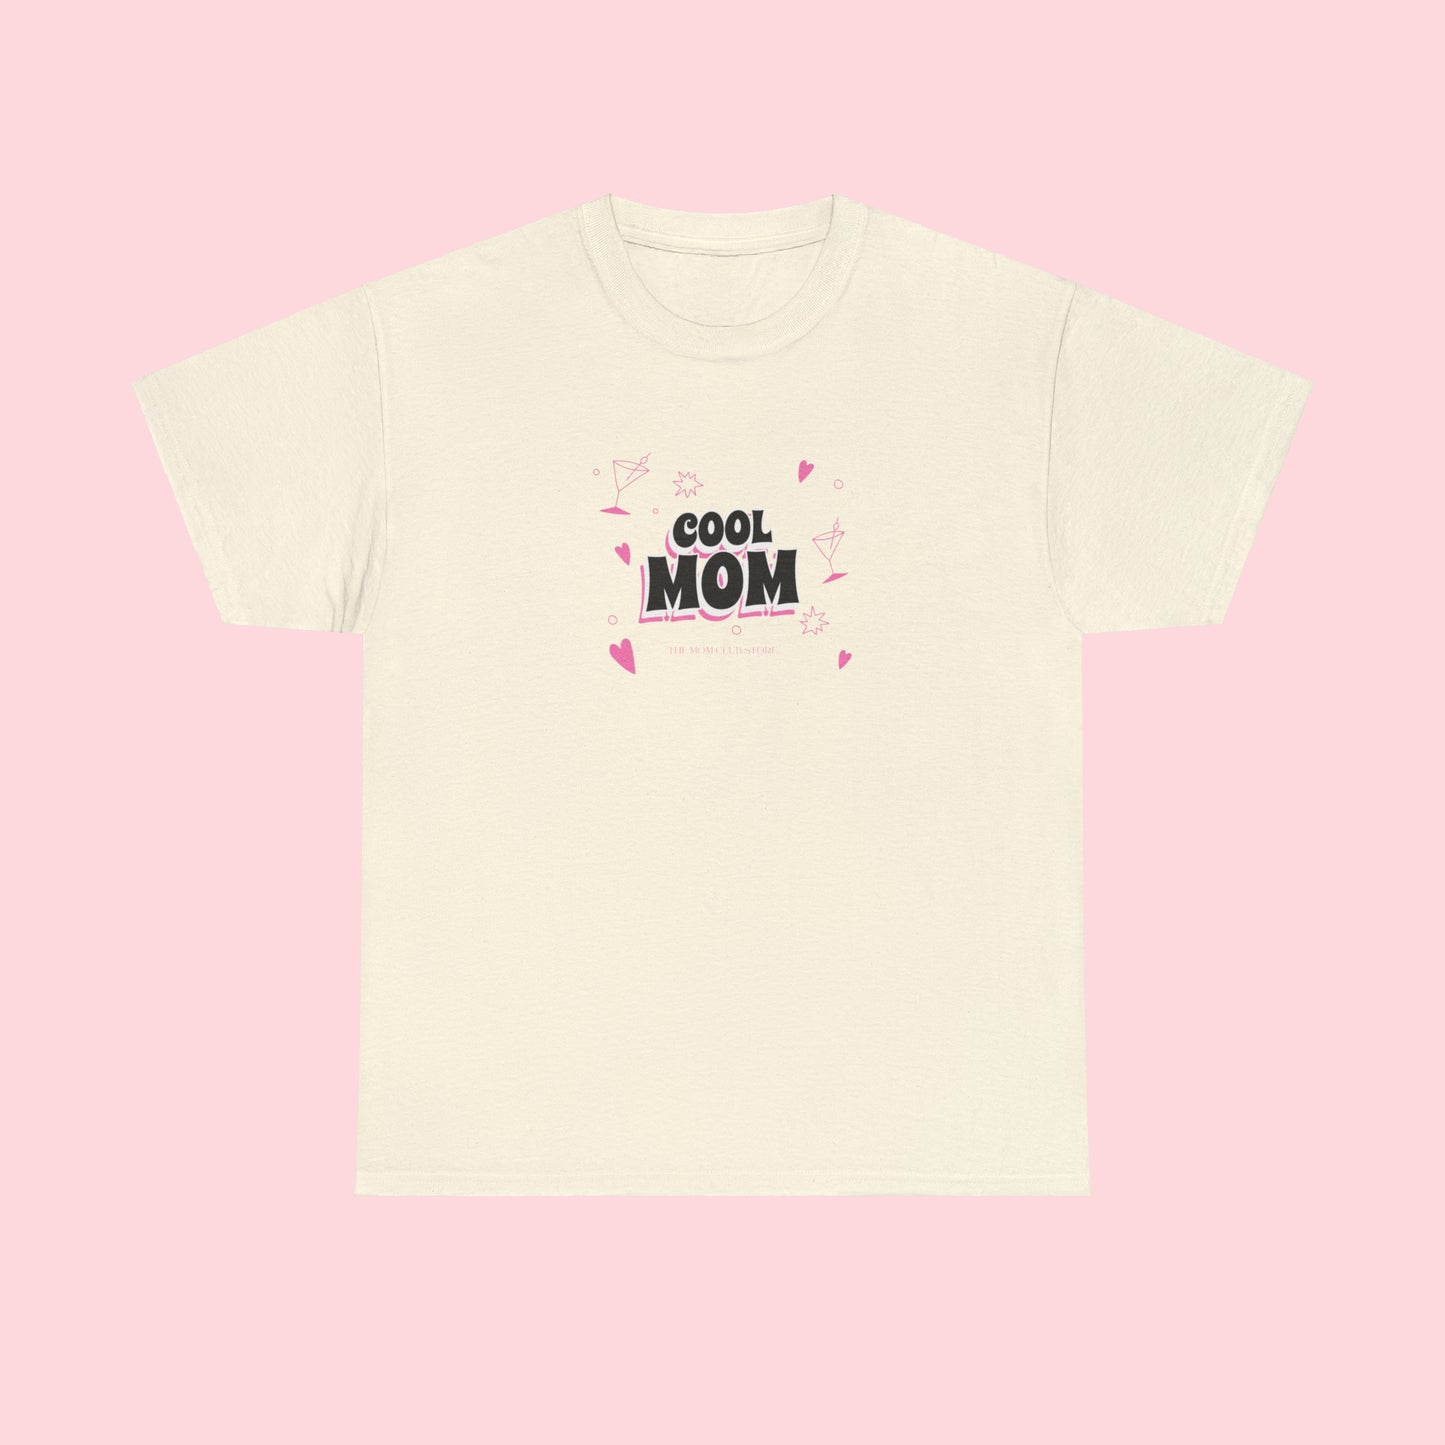 COOL MOM t-shirt